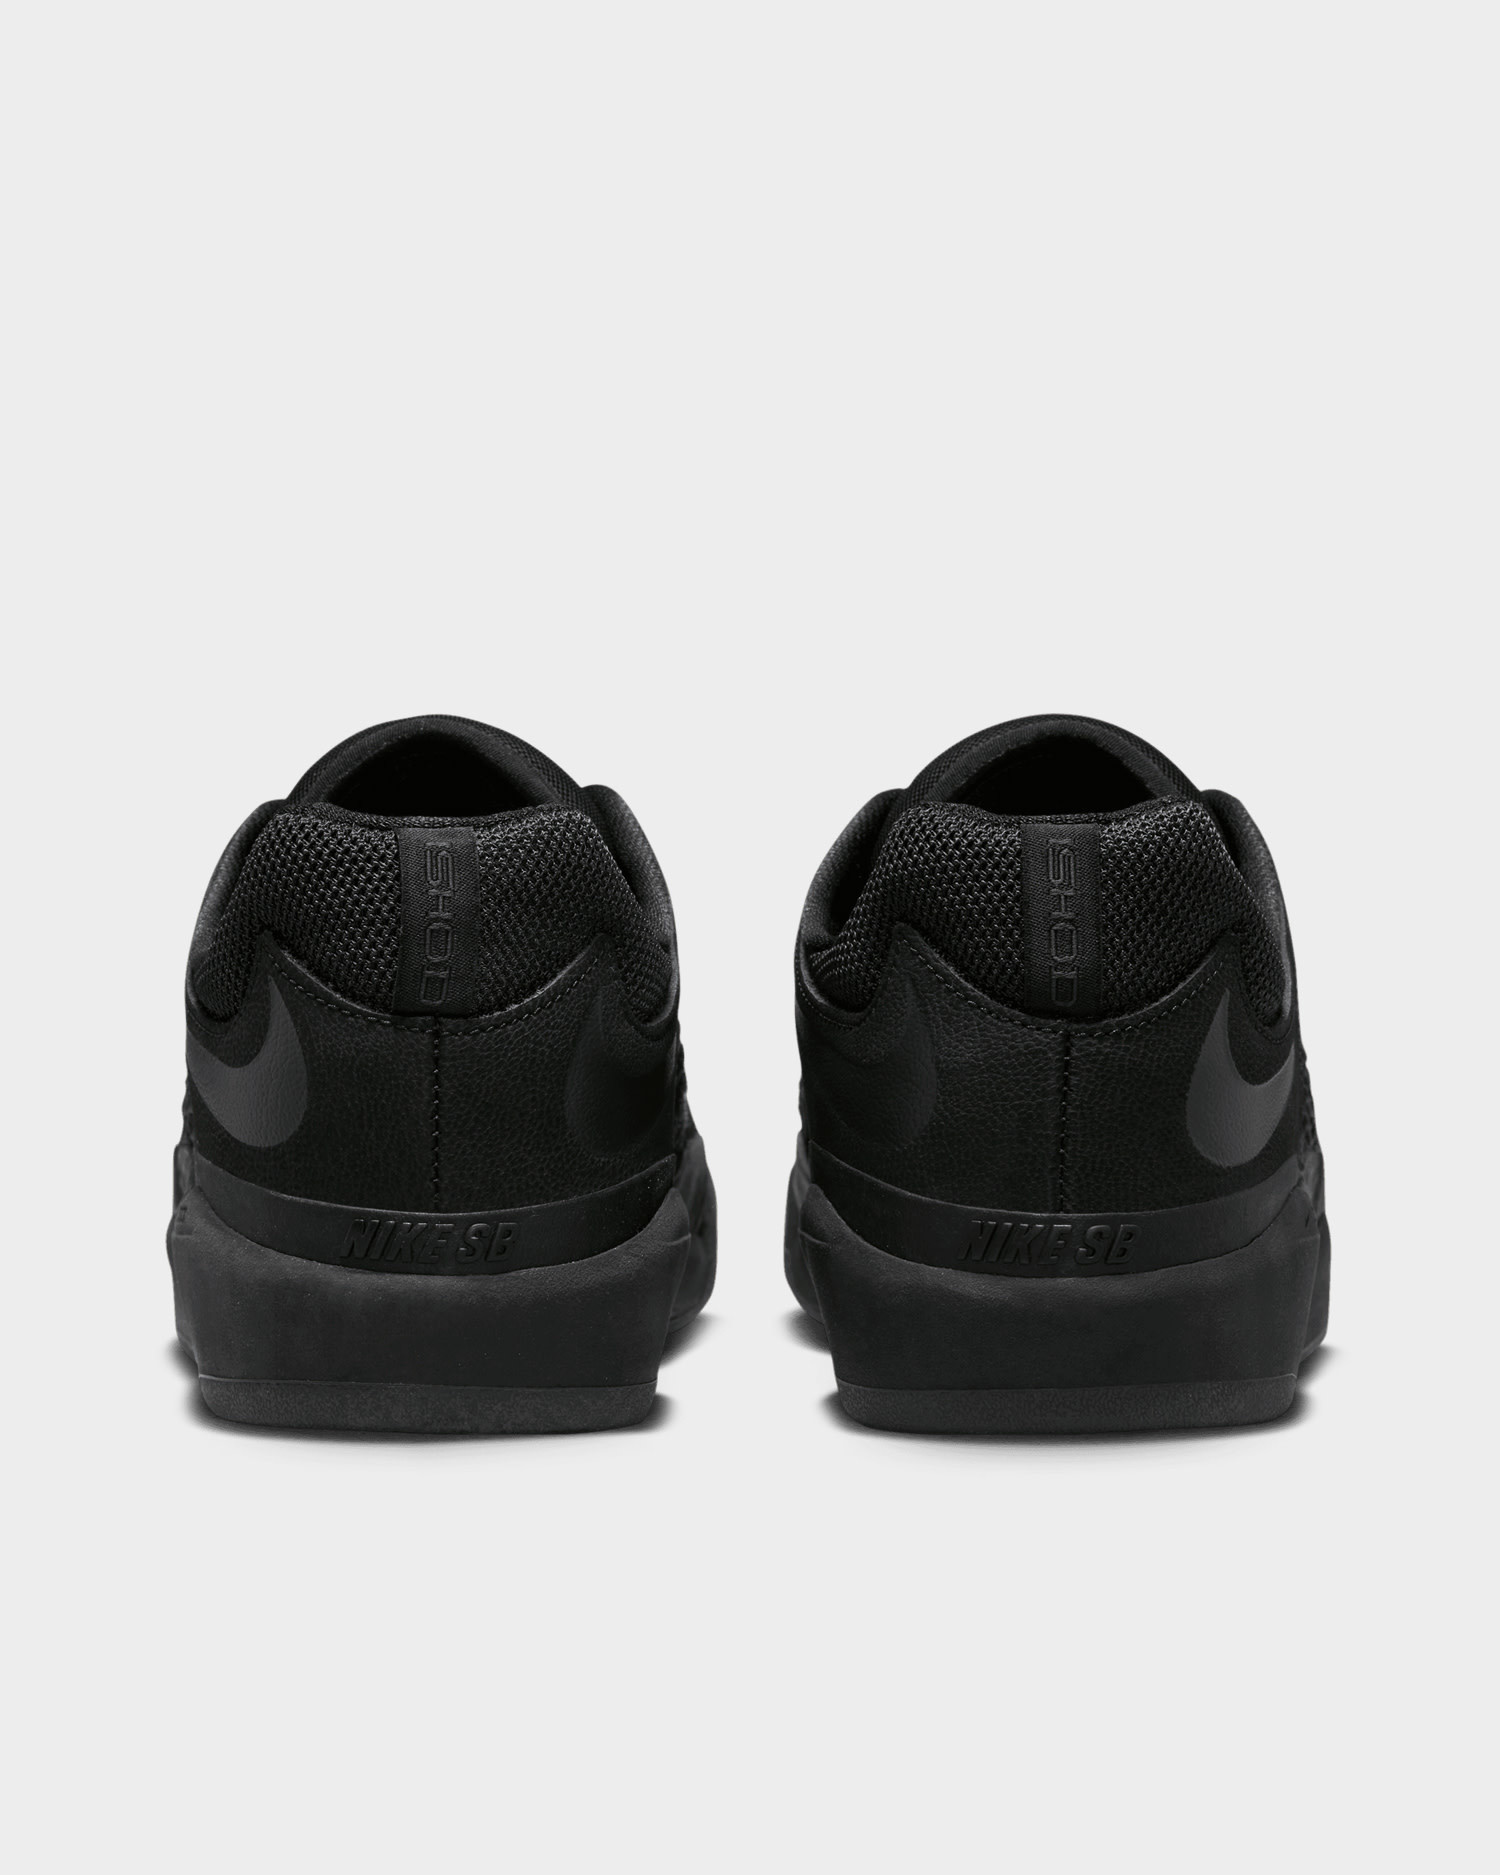 Nike SB Ishod Wair Premium Black/Black